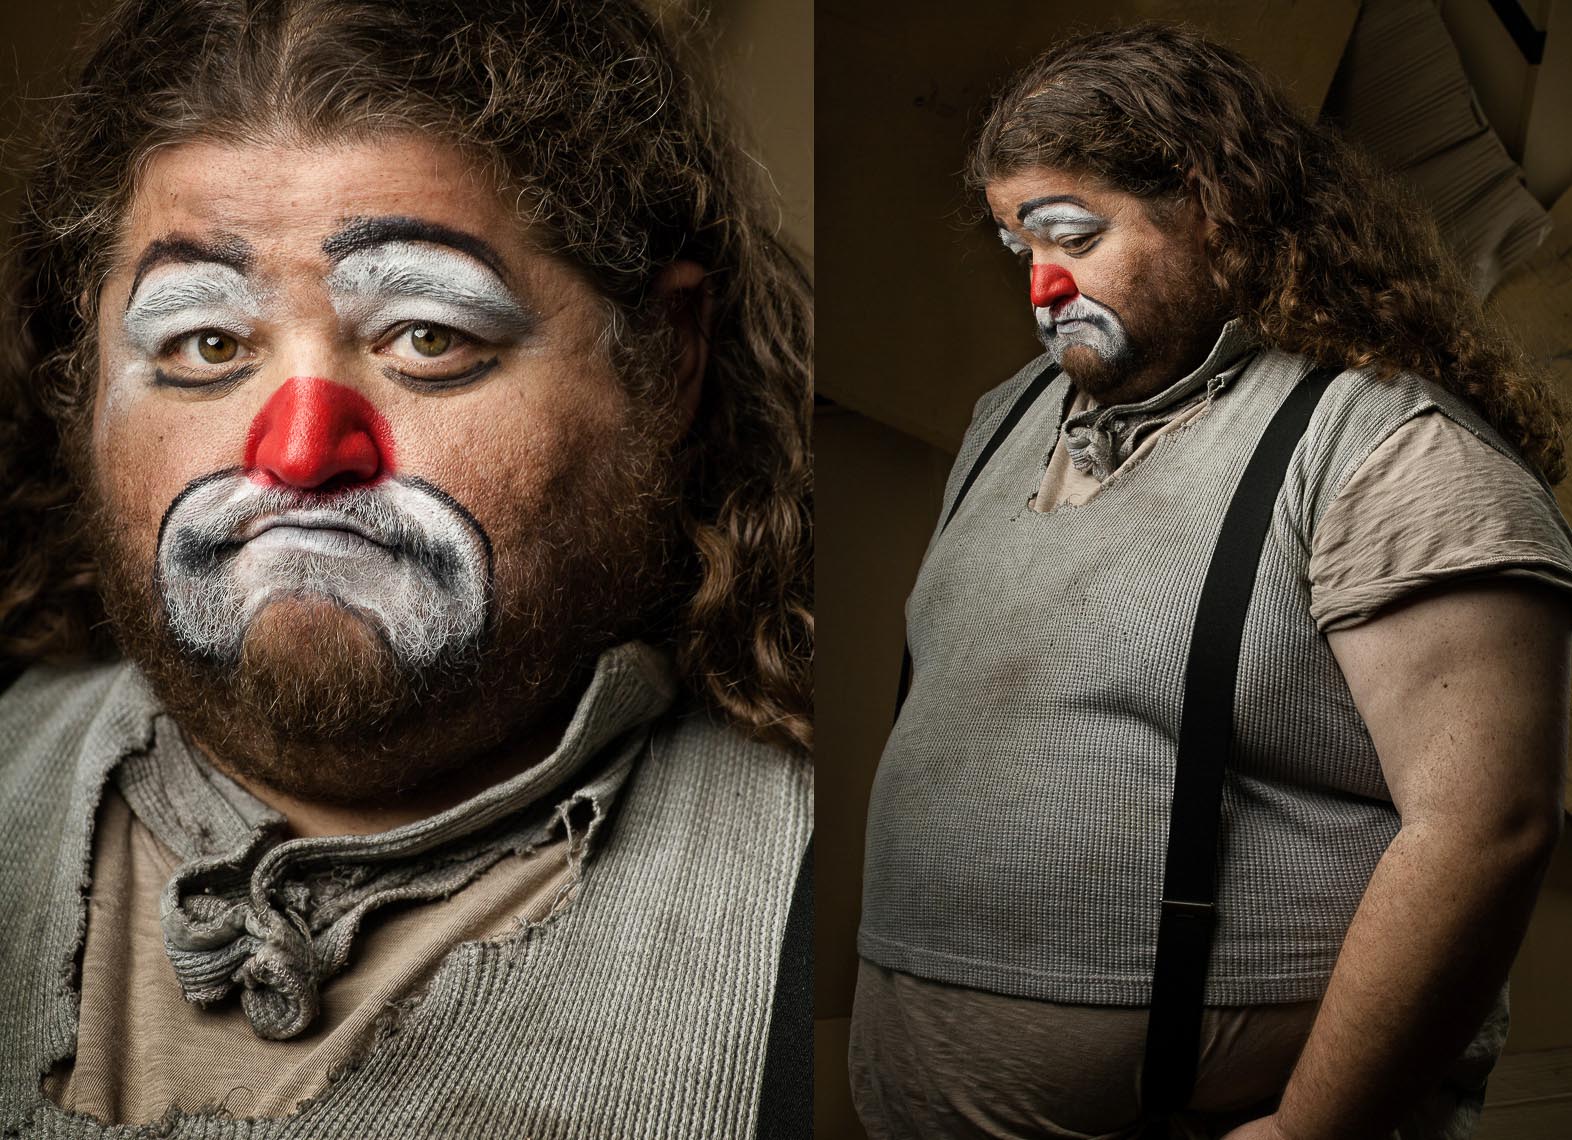 Jorge-Garcia-sad-clown